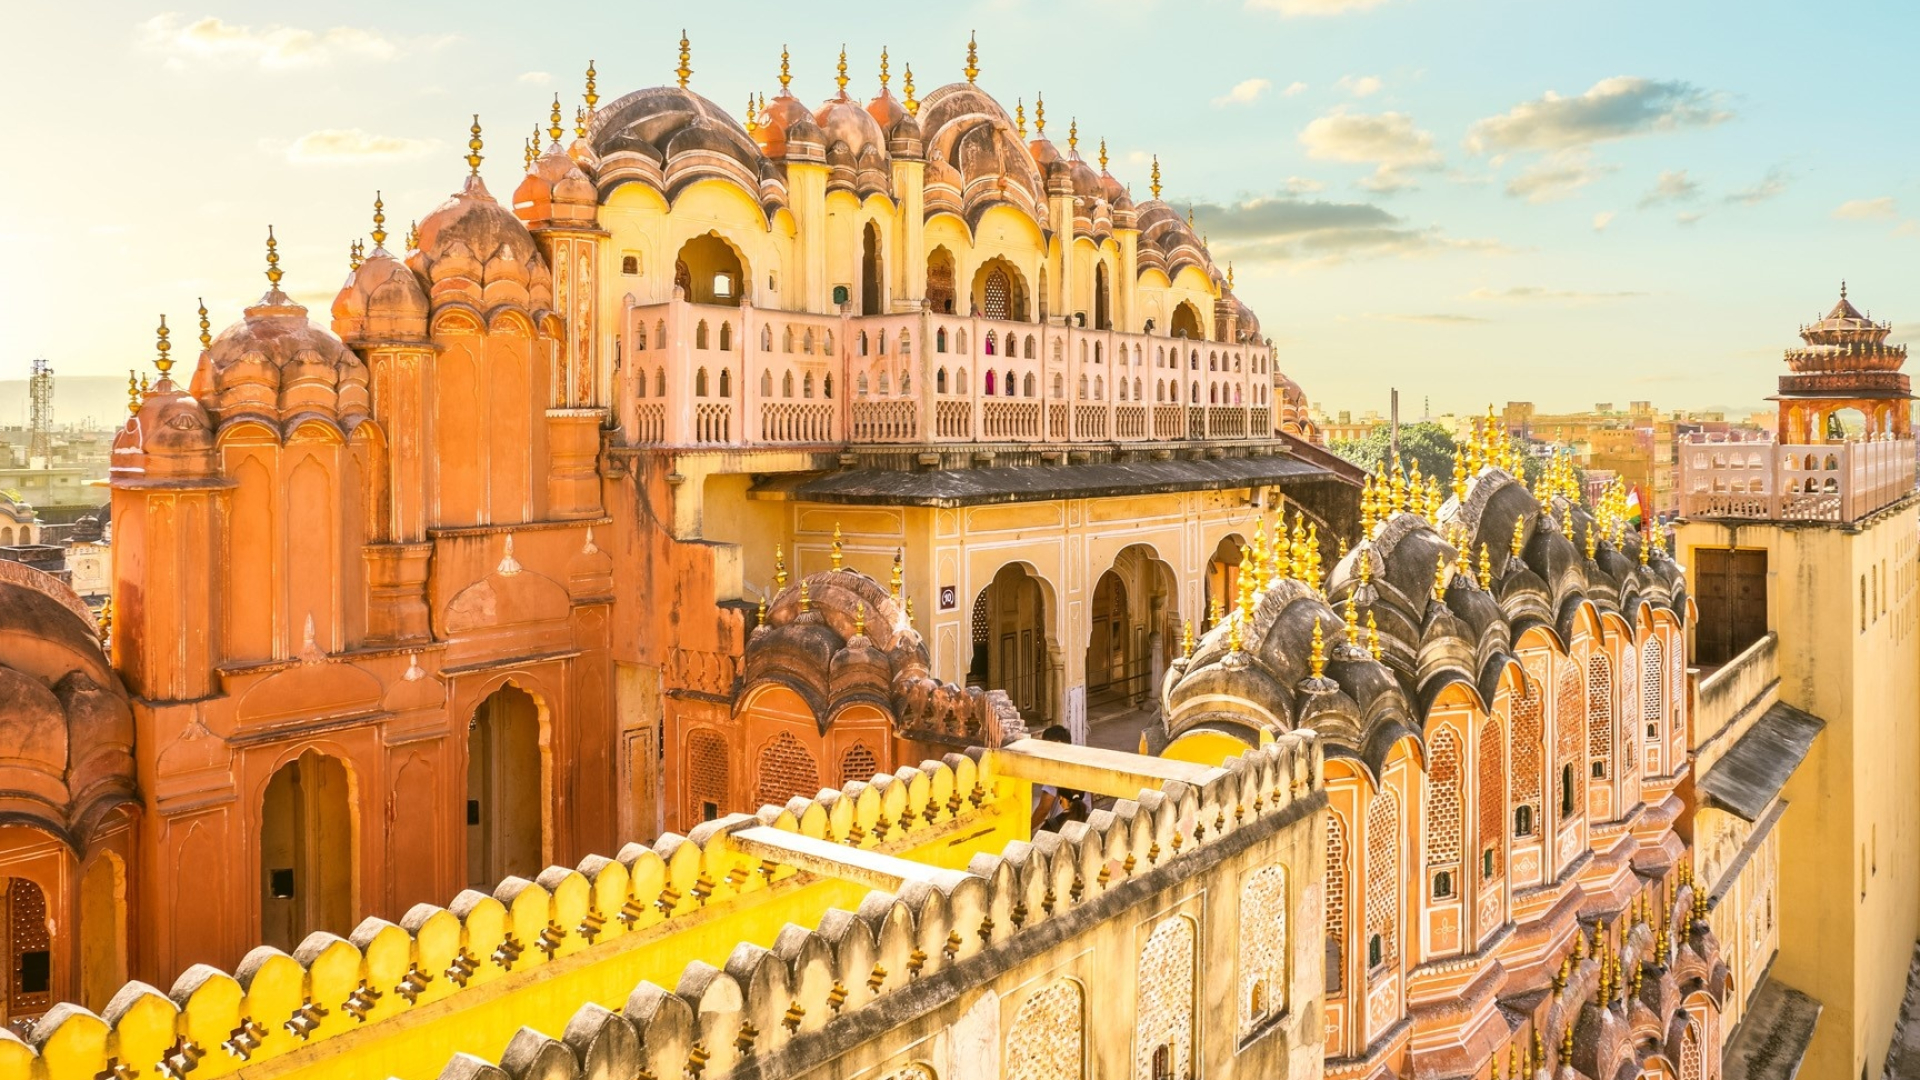 Jaipur, Hawa Mahal, Palace of the Winds, Windows 10 Spotlight Images, 1920x1080 Full HD Desktop